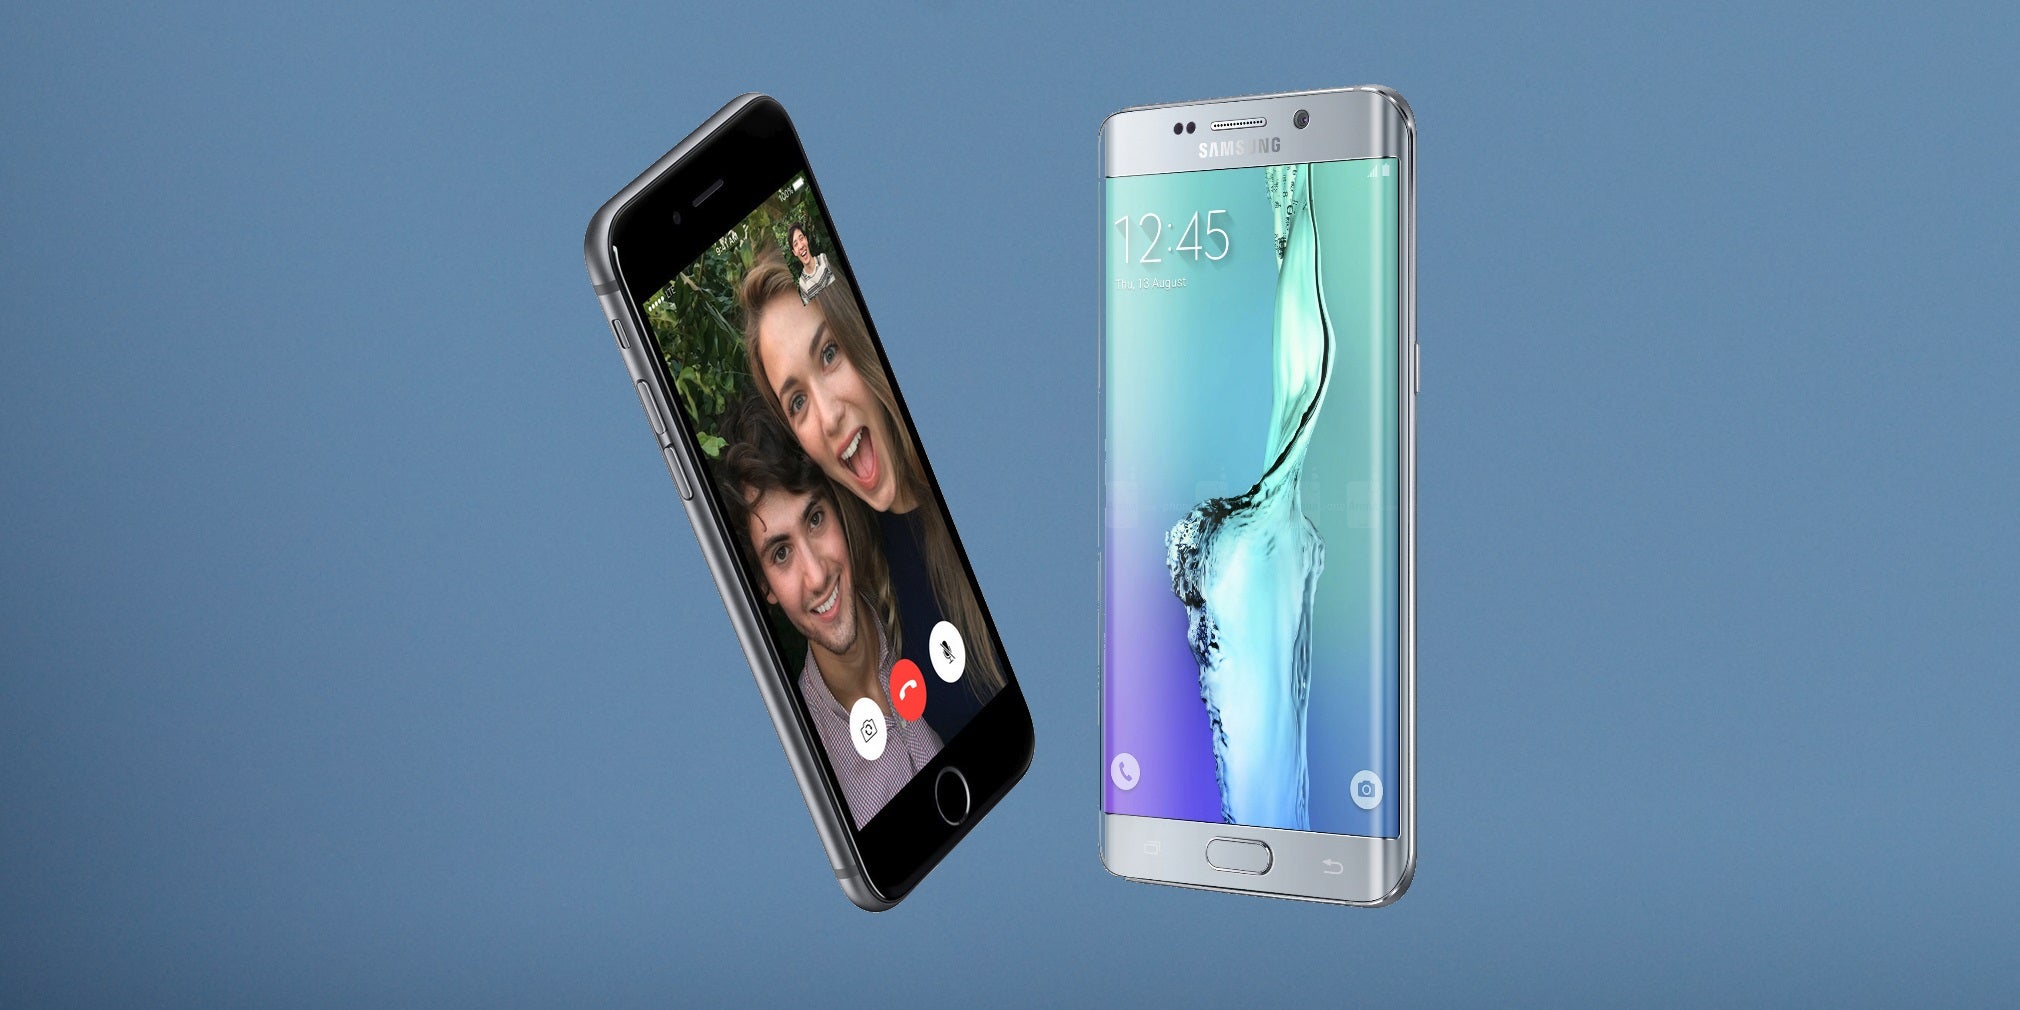 Apple iPhone 6s Plus vs Samsung Galaxy S6 edge+: in-depth specs comparison